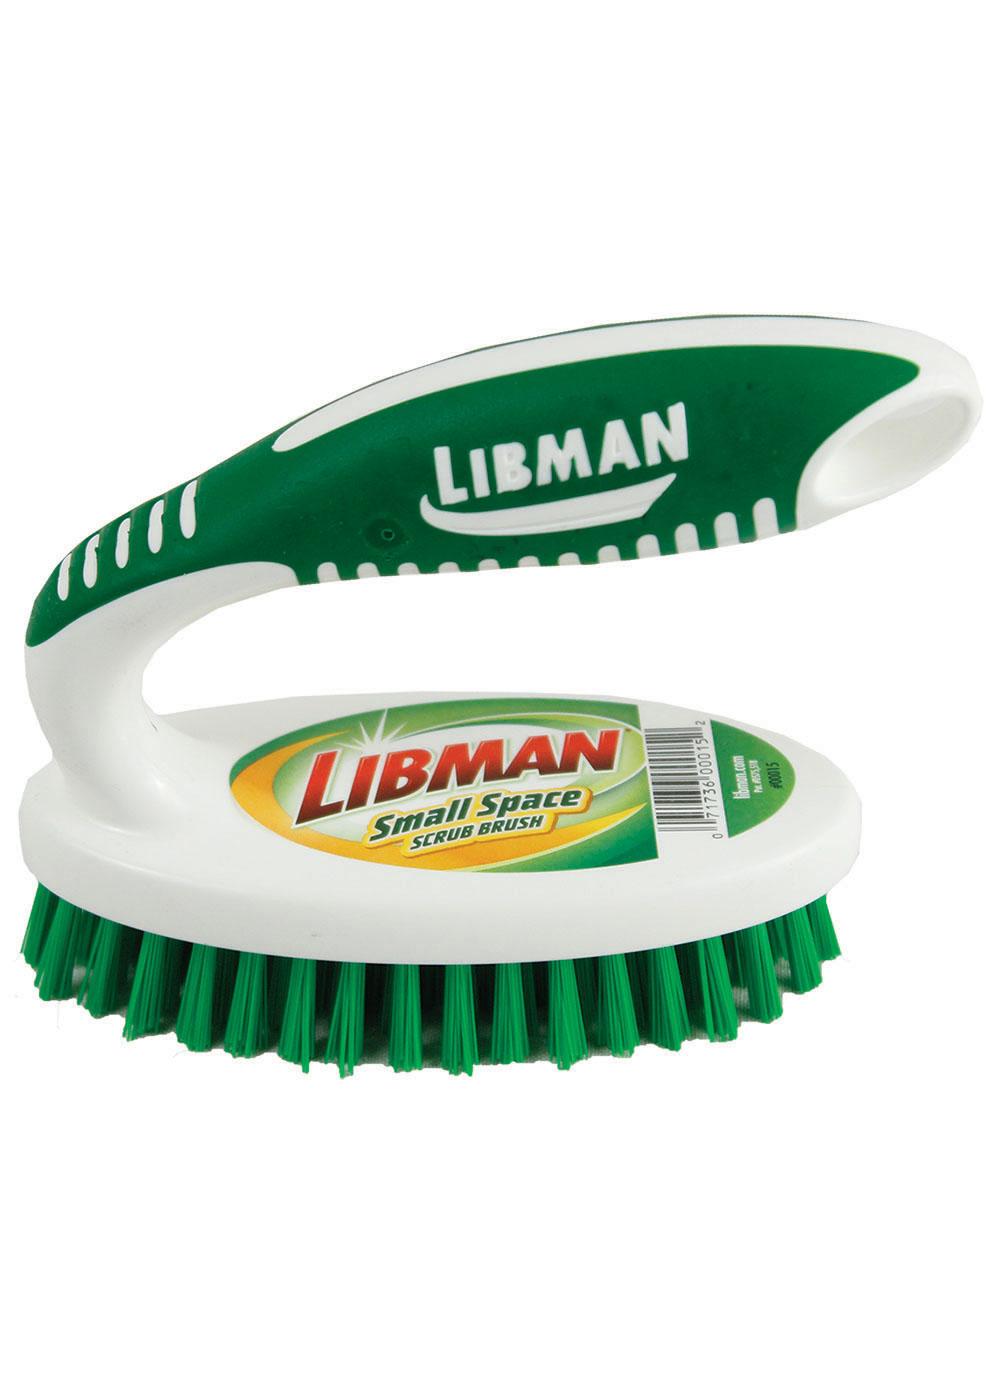 Libman Small Scrub Brush; image 1 of 4